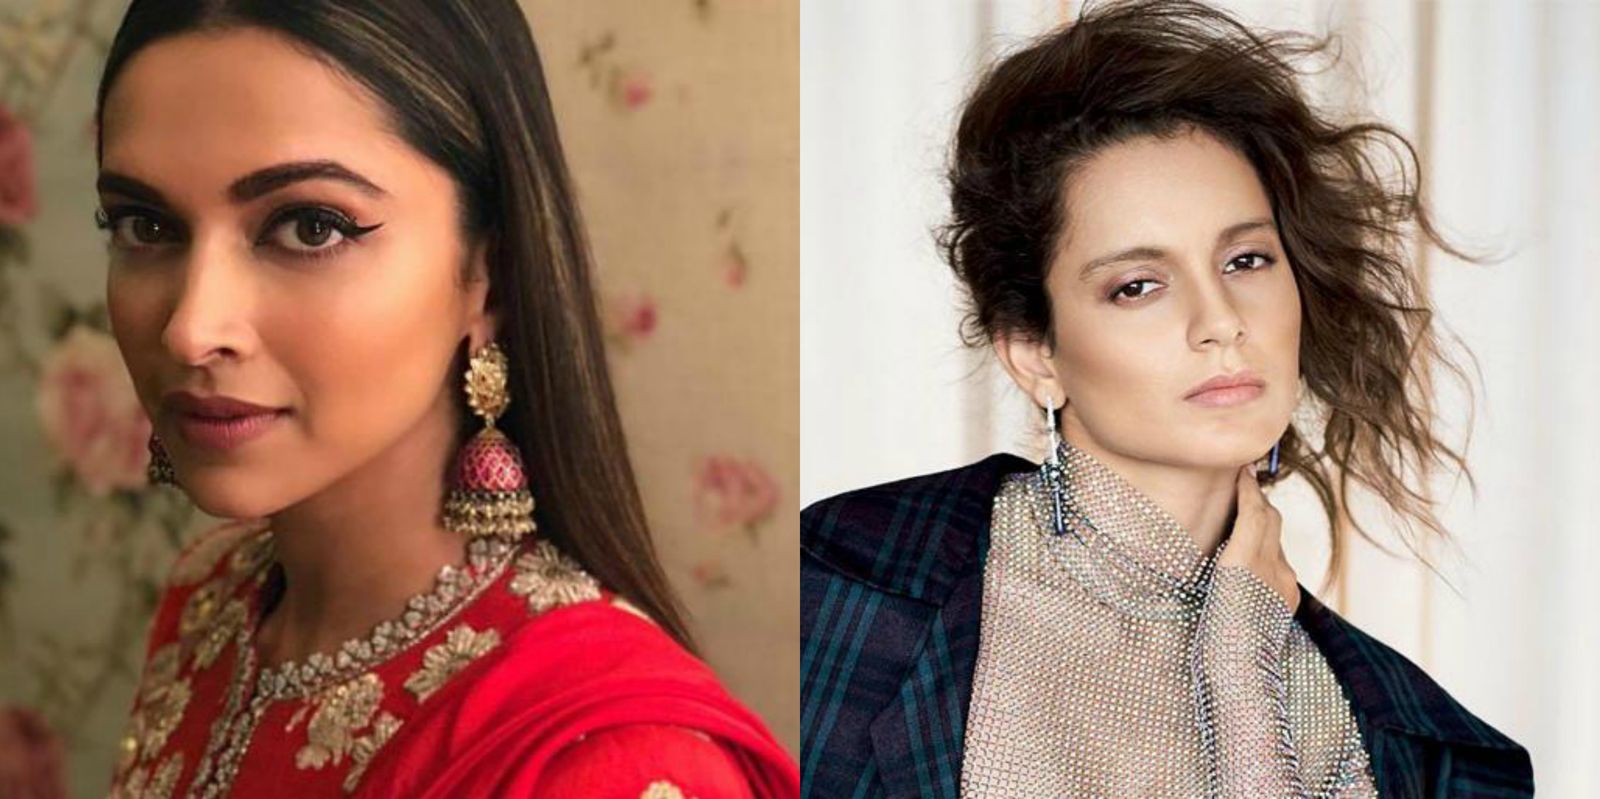 Deepika Padukone To Star In Anurag Basu's Imli After Kangana Ranaut's Exit?